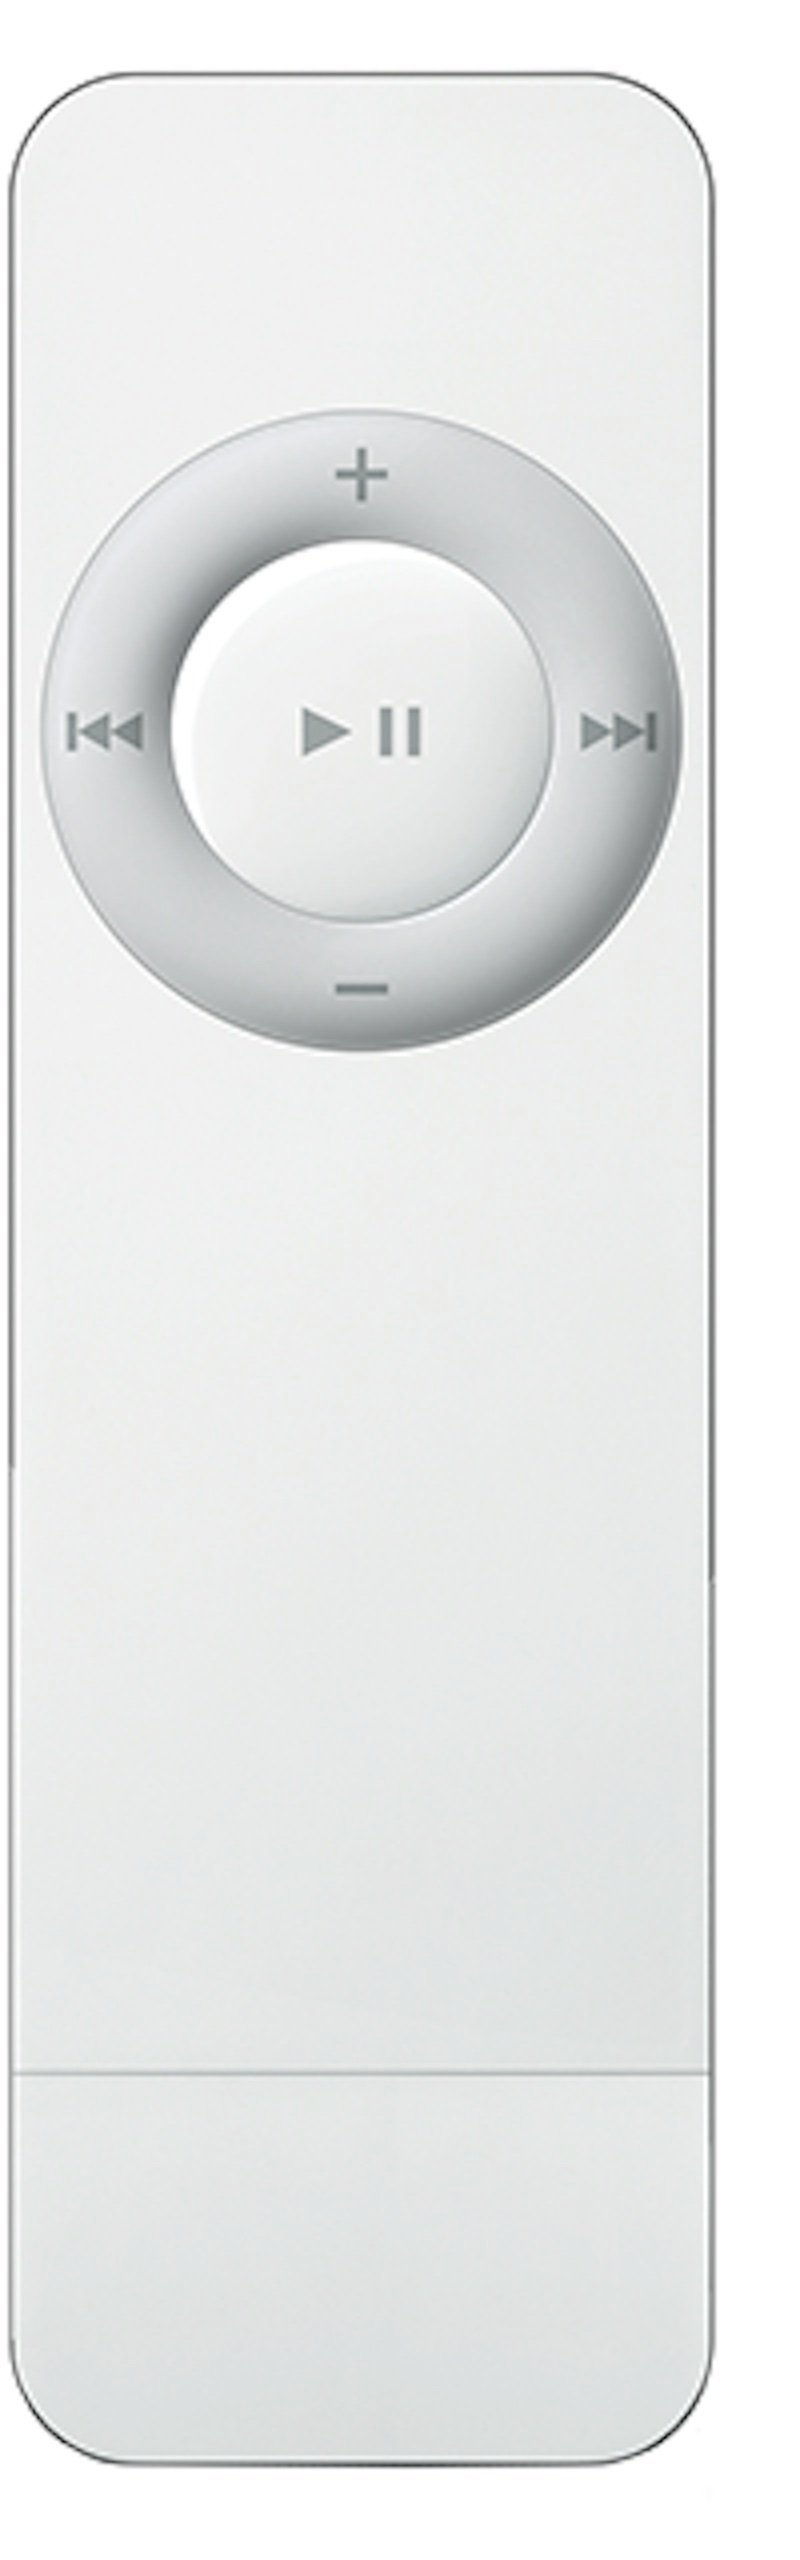 iPod shuffle 512MB - ポータブルプレーヤー